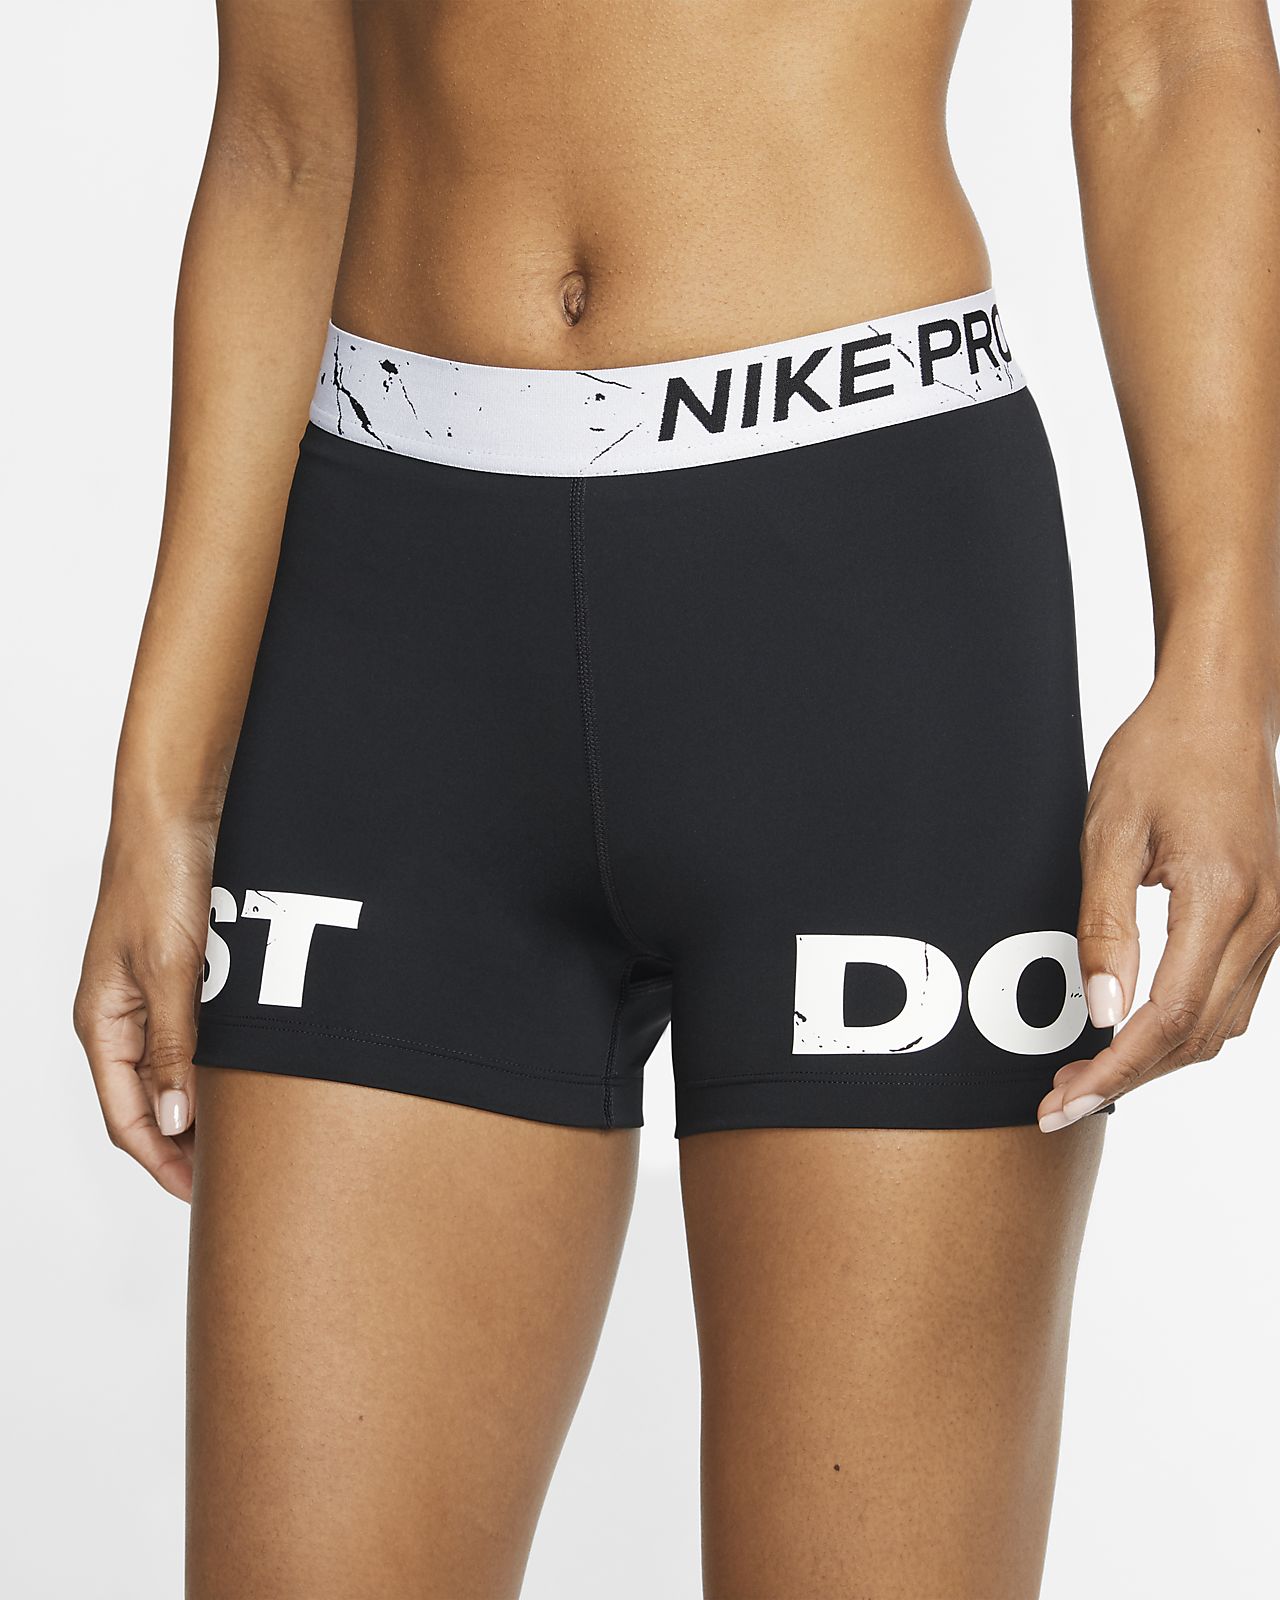 Nike Pro Women S Graphic 3 Training Shorts